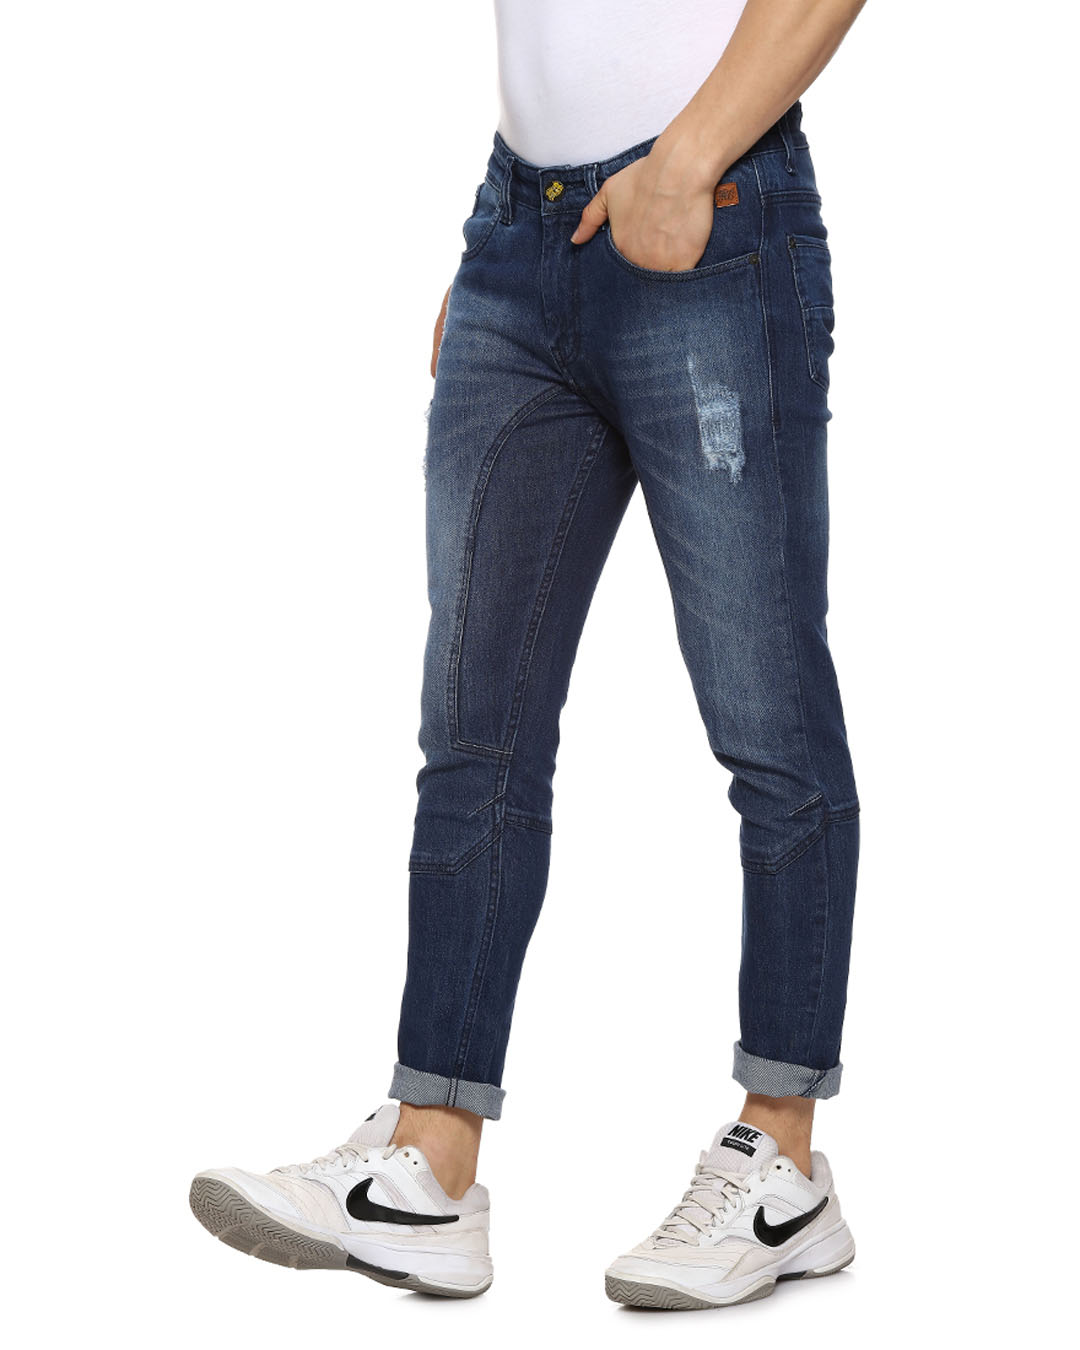 Buy Campus Sutra Date Night Stud Boy Jeans Online at Bewakoof